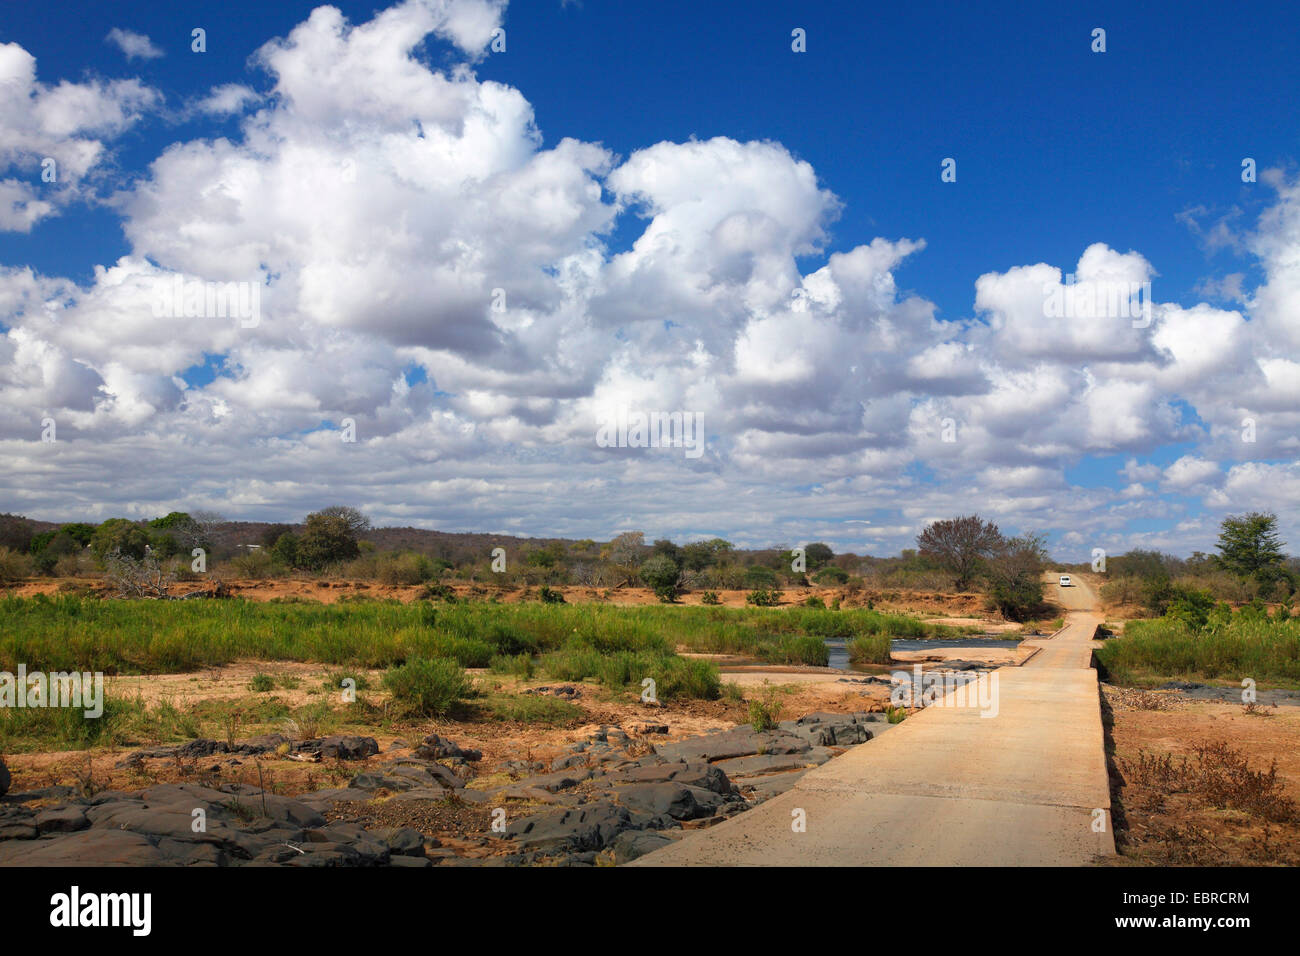 river flood plain of the Olifants River, South Africa, Krueger National Park, Balule Stock Photo